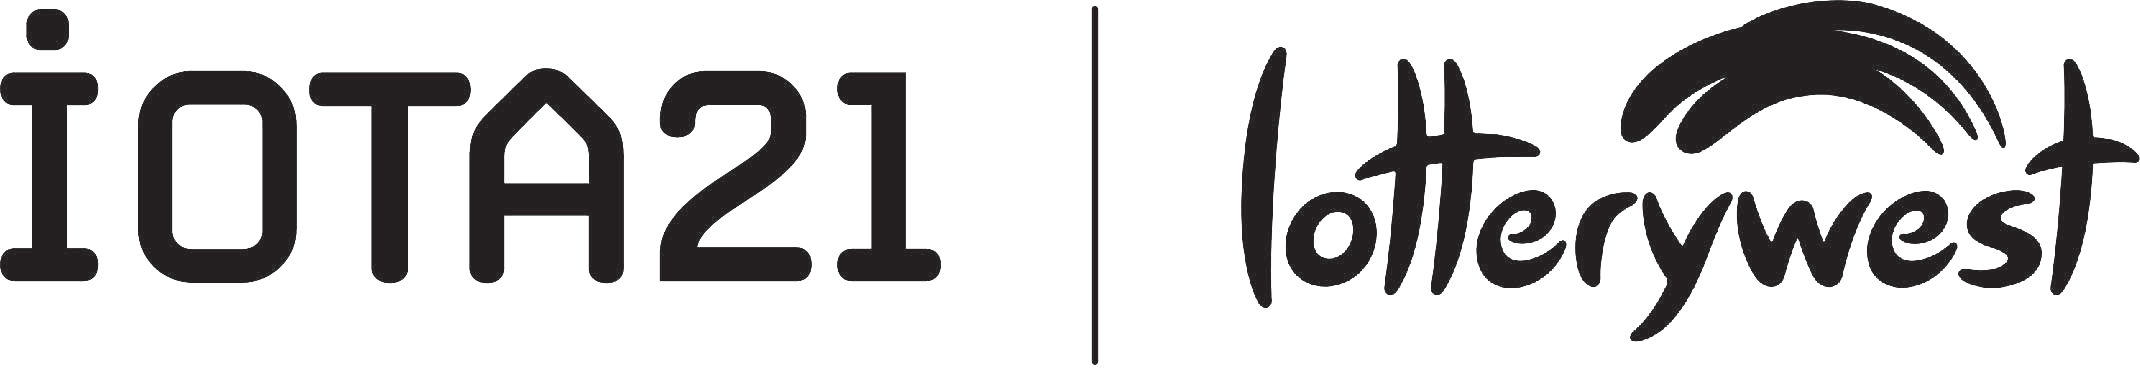 IOTA21-mono-logoblock.jpg-1.png